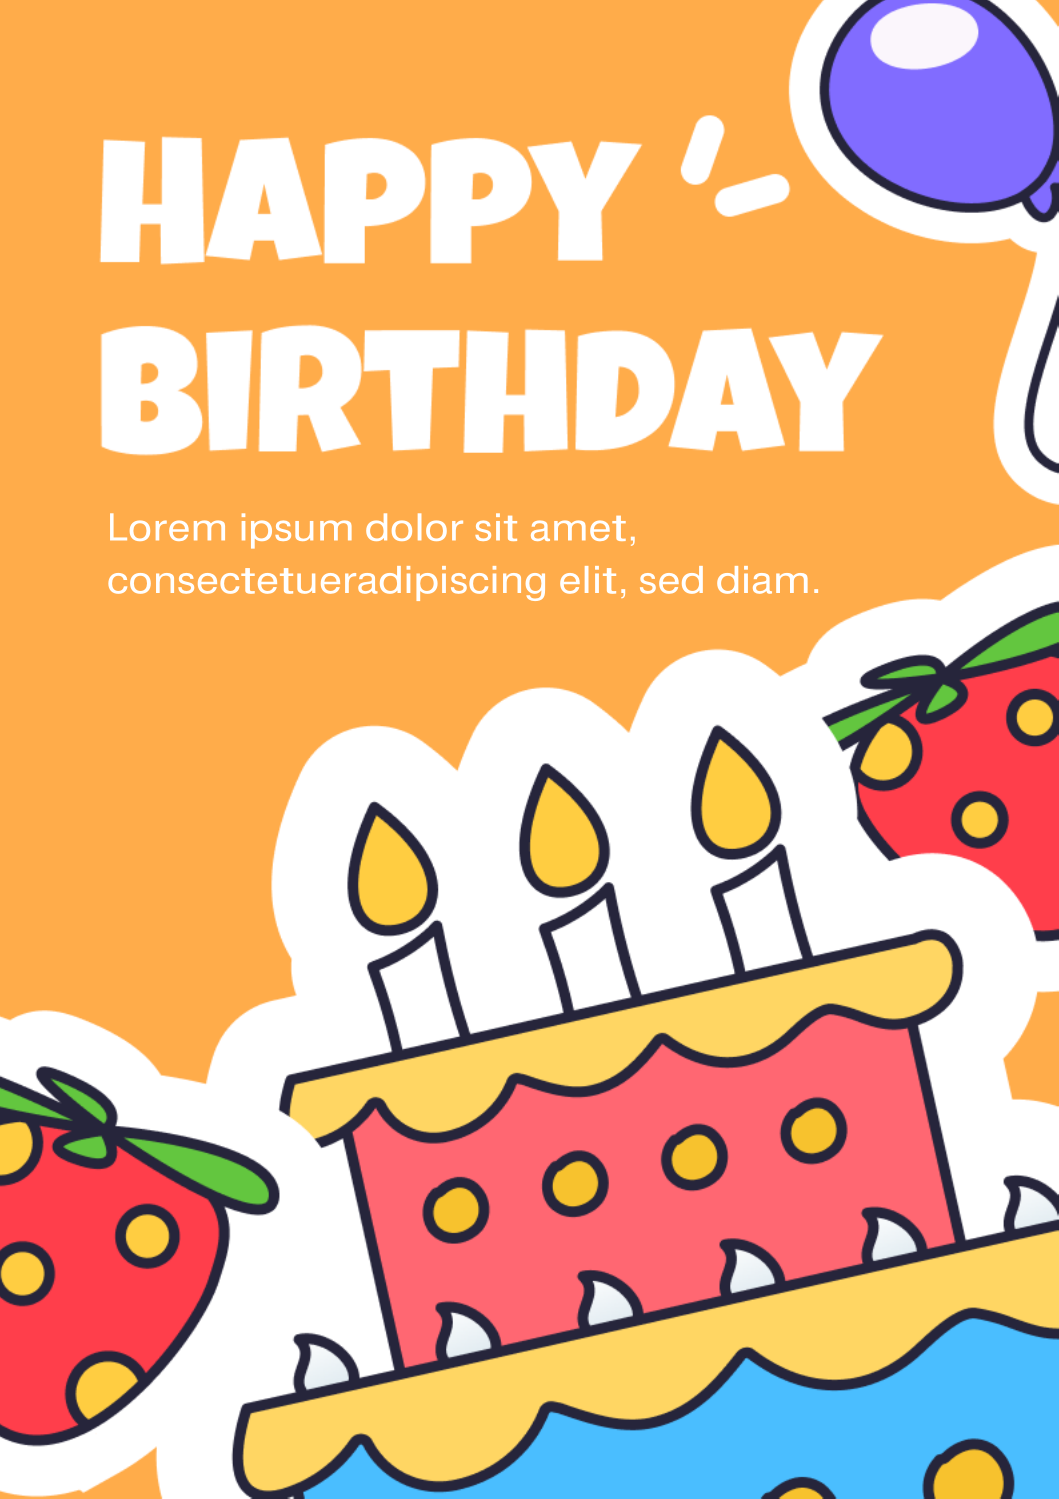 Happy Birthday Card Wishes